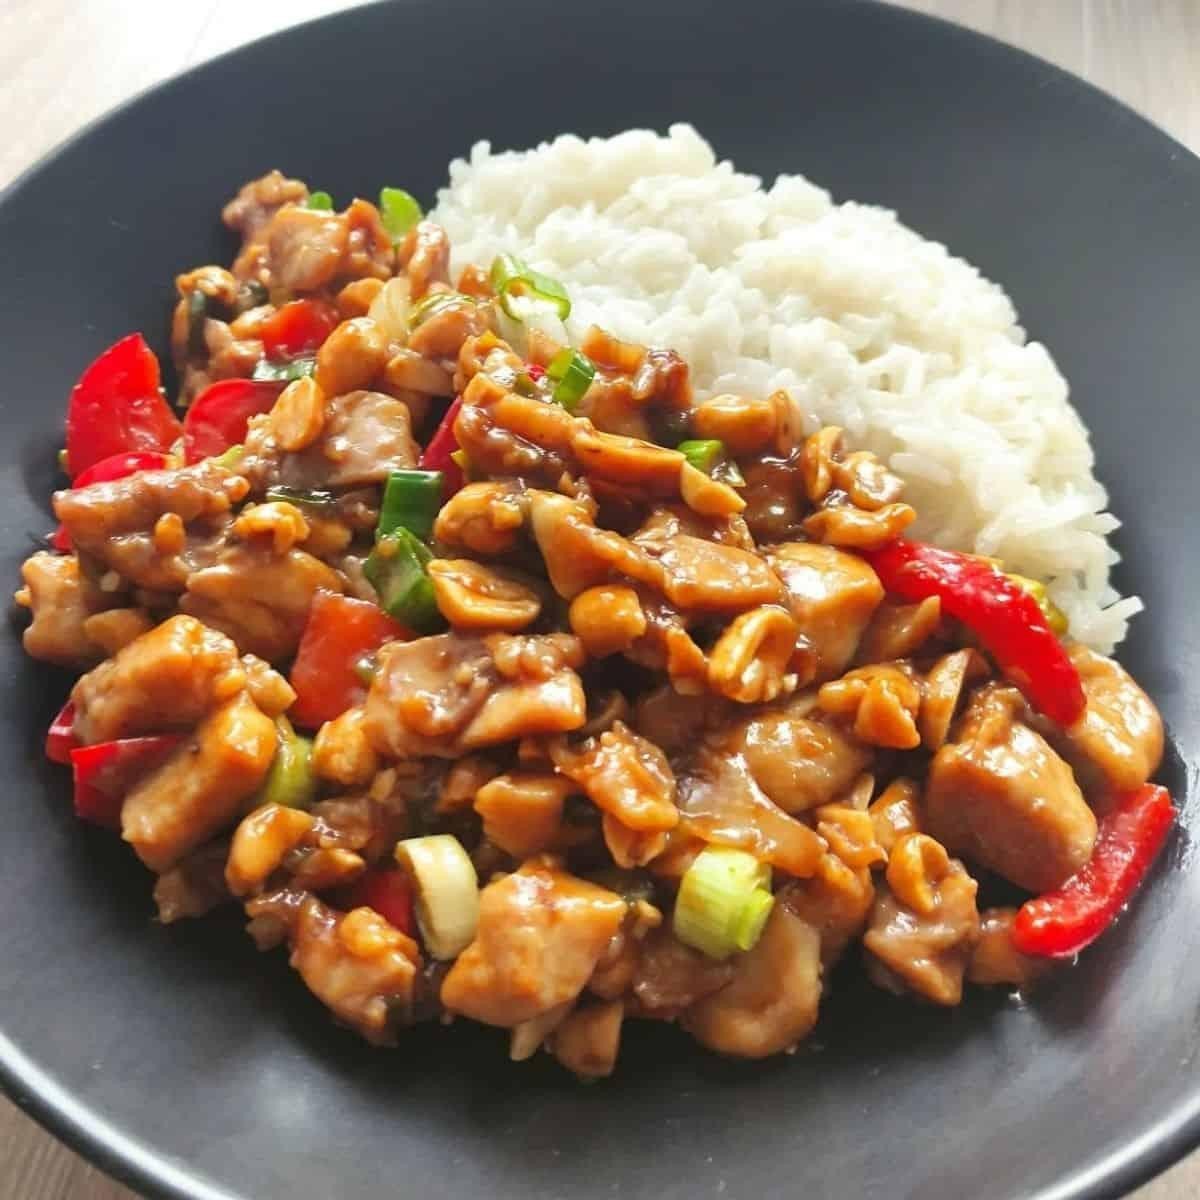 Kung Pao Chicken over rice 宮保雞丁飯